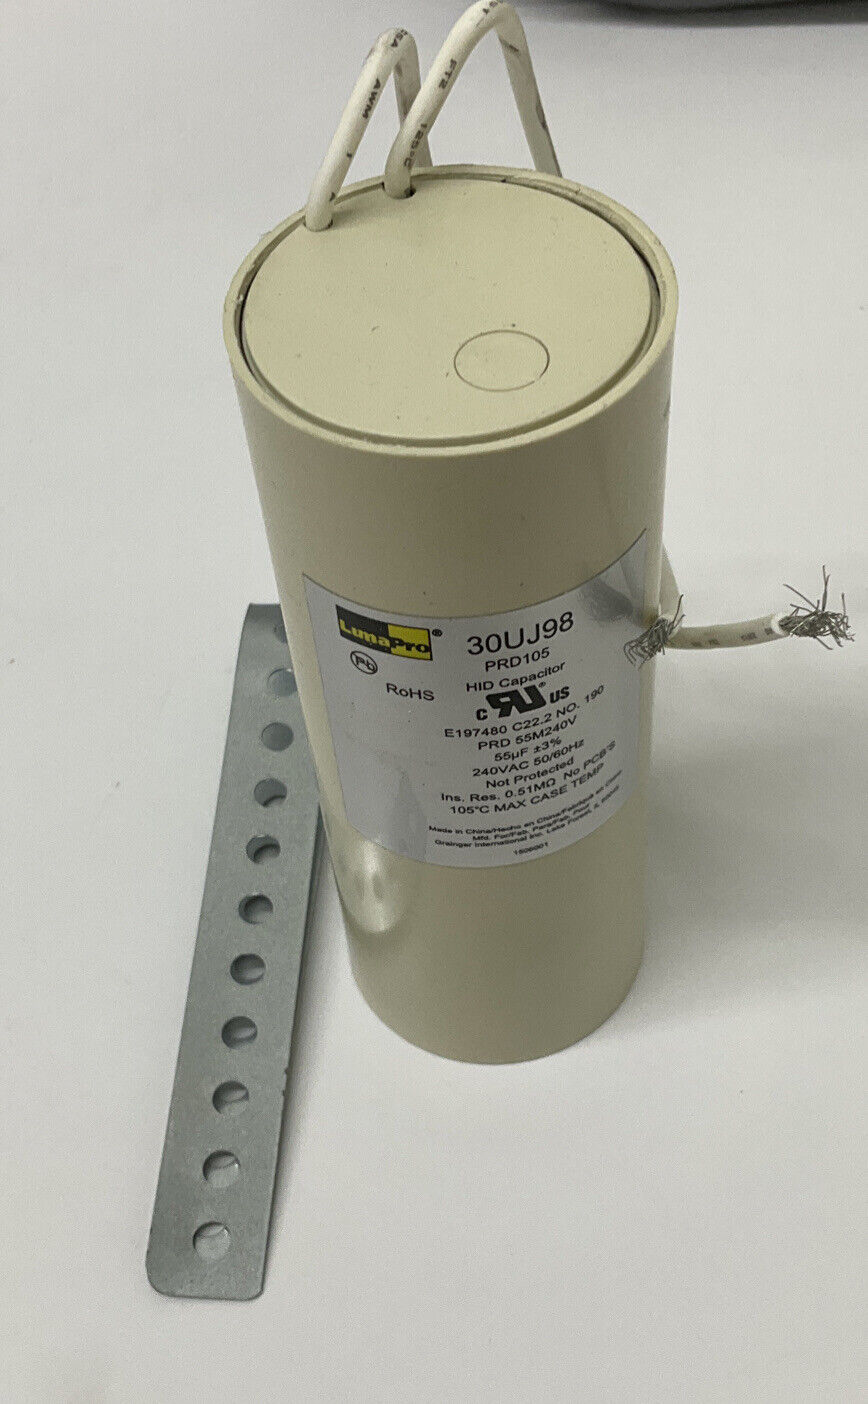 Lumapro 3OUJ98 Dry Film Capacitor 55UF 240 VAC (GR209)